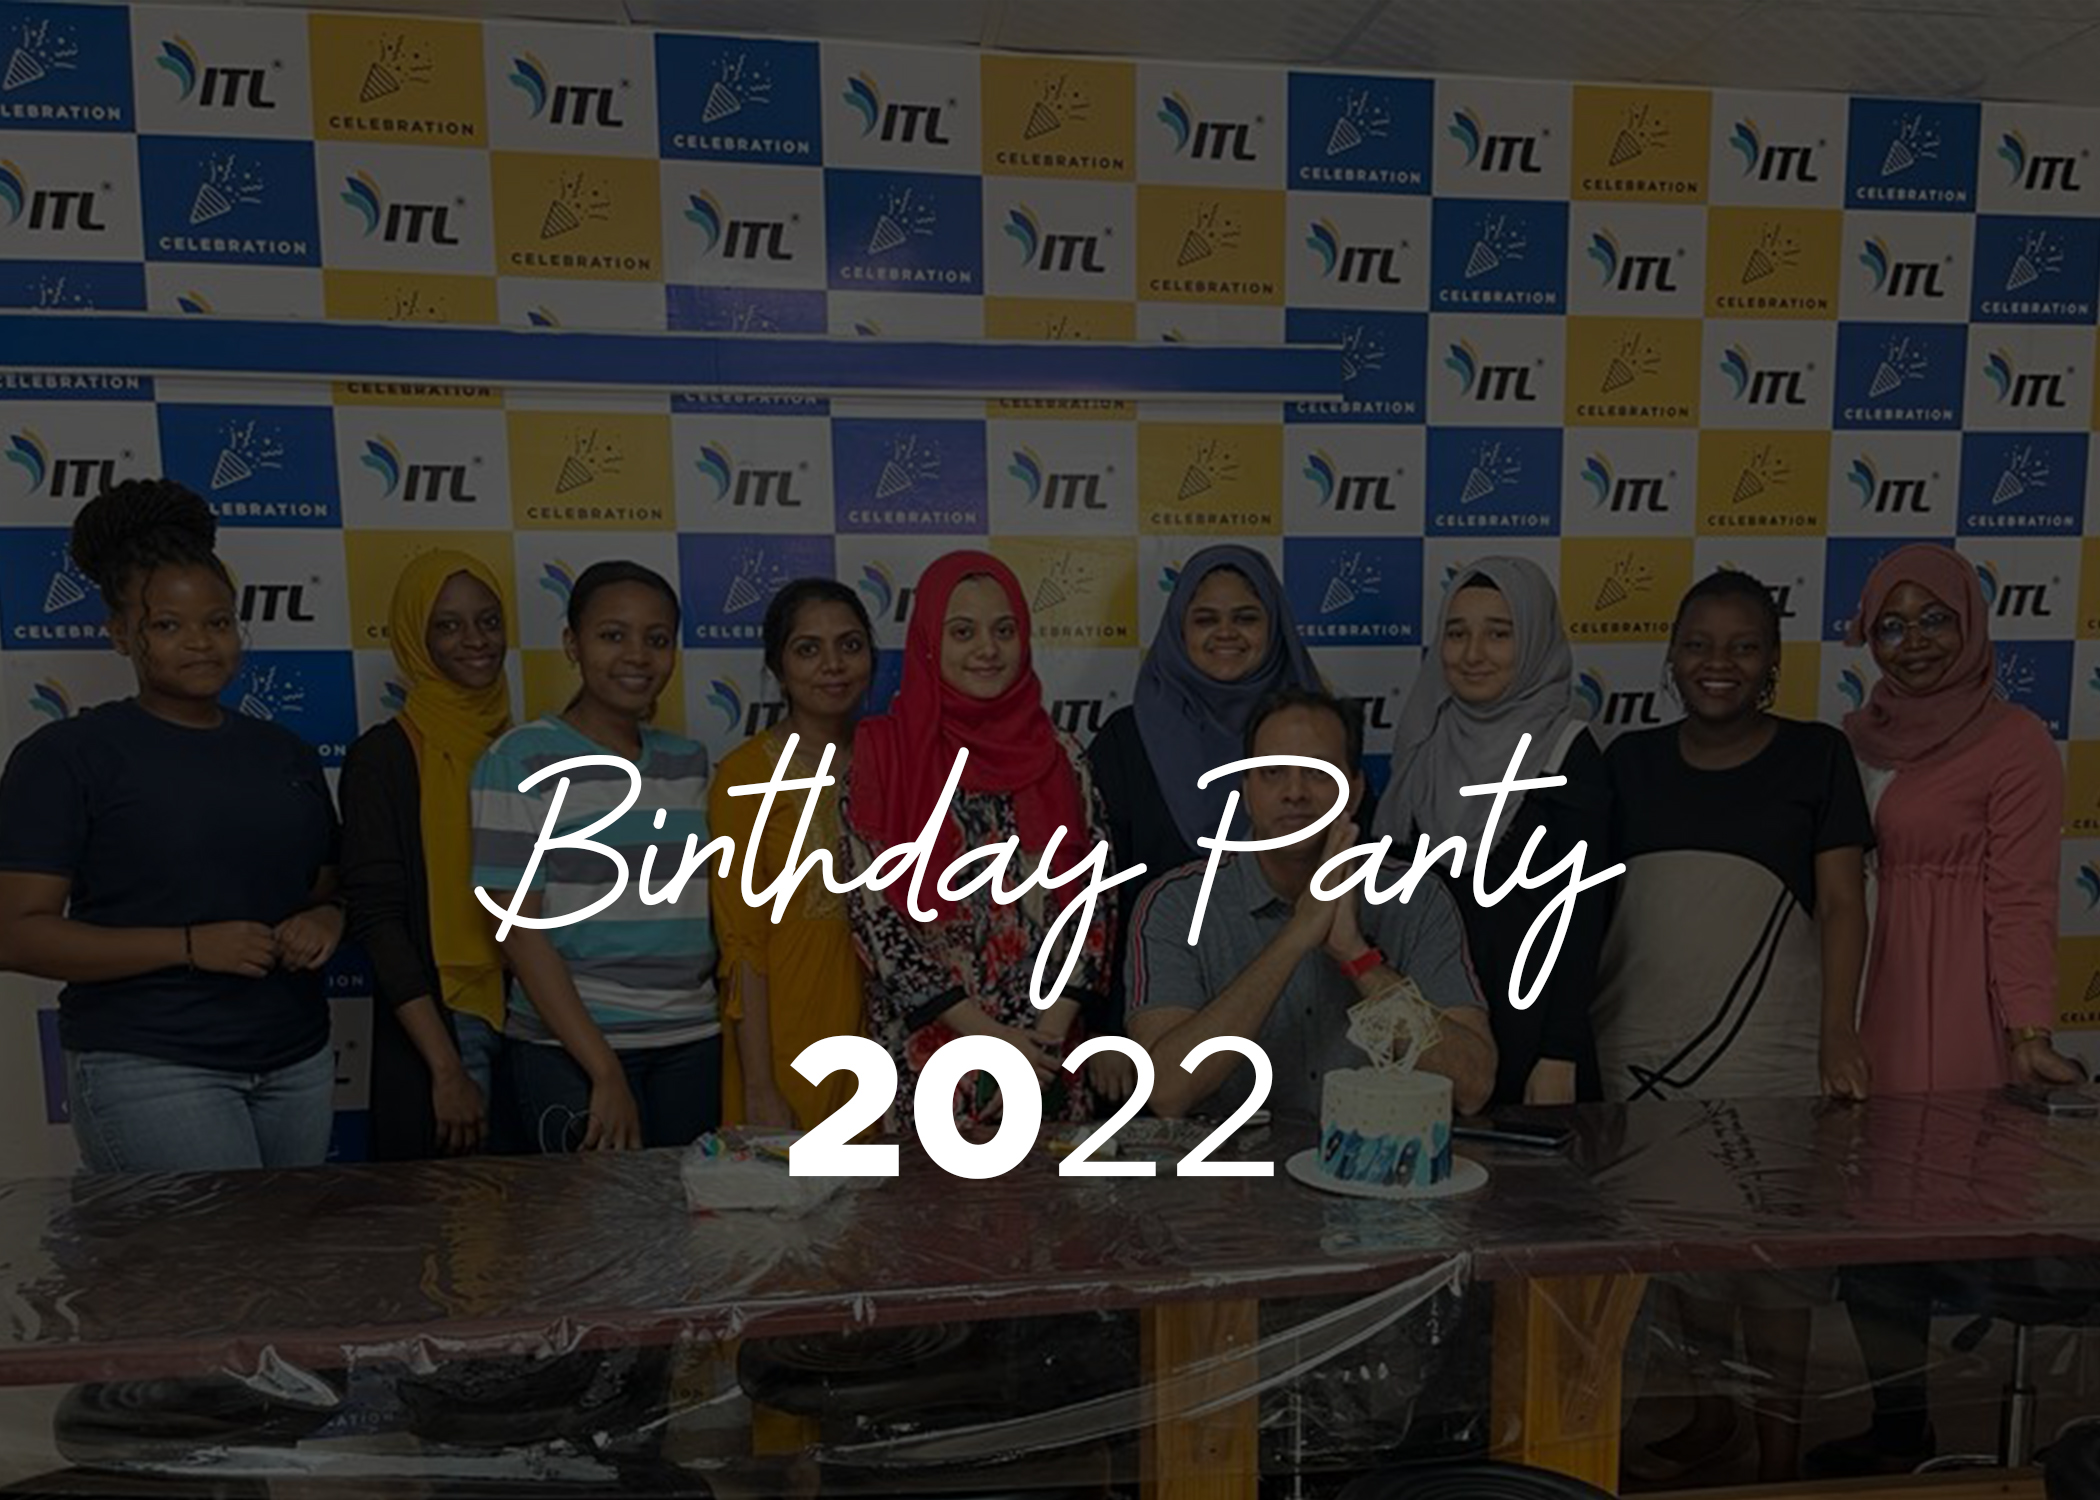 CultureBirthday Party 2022